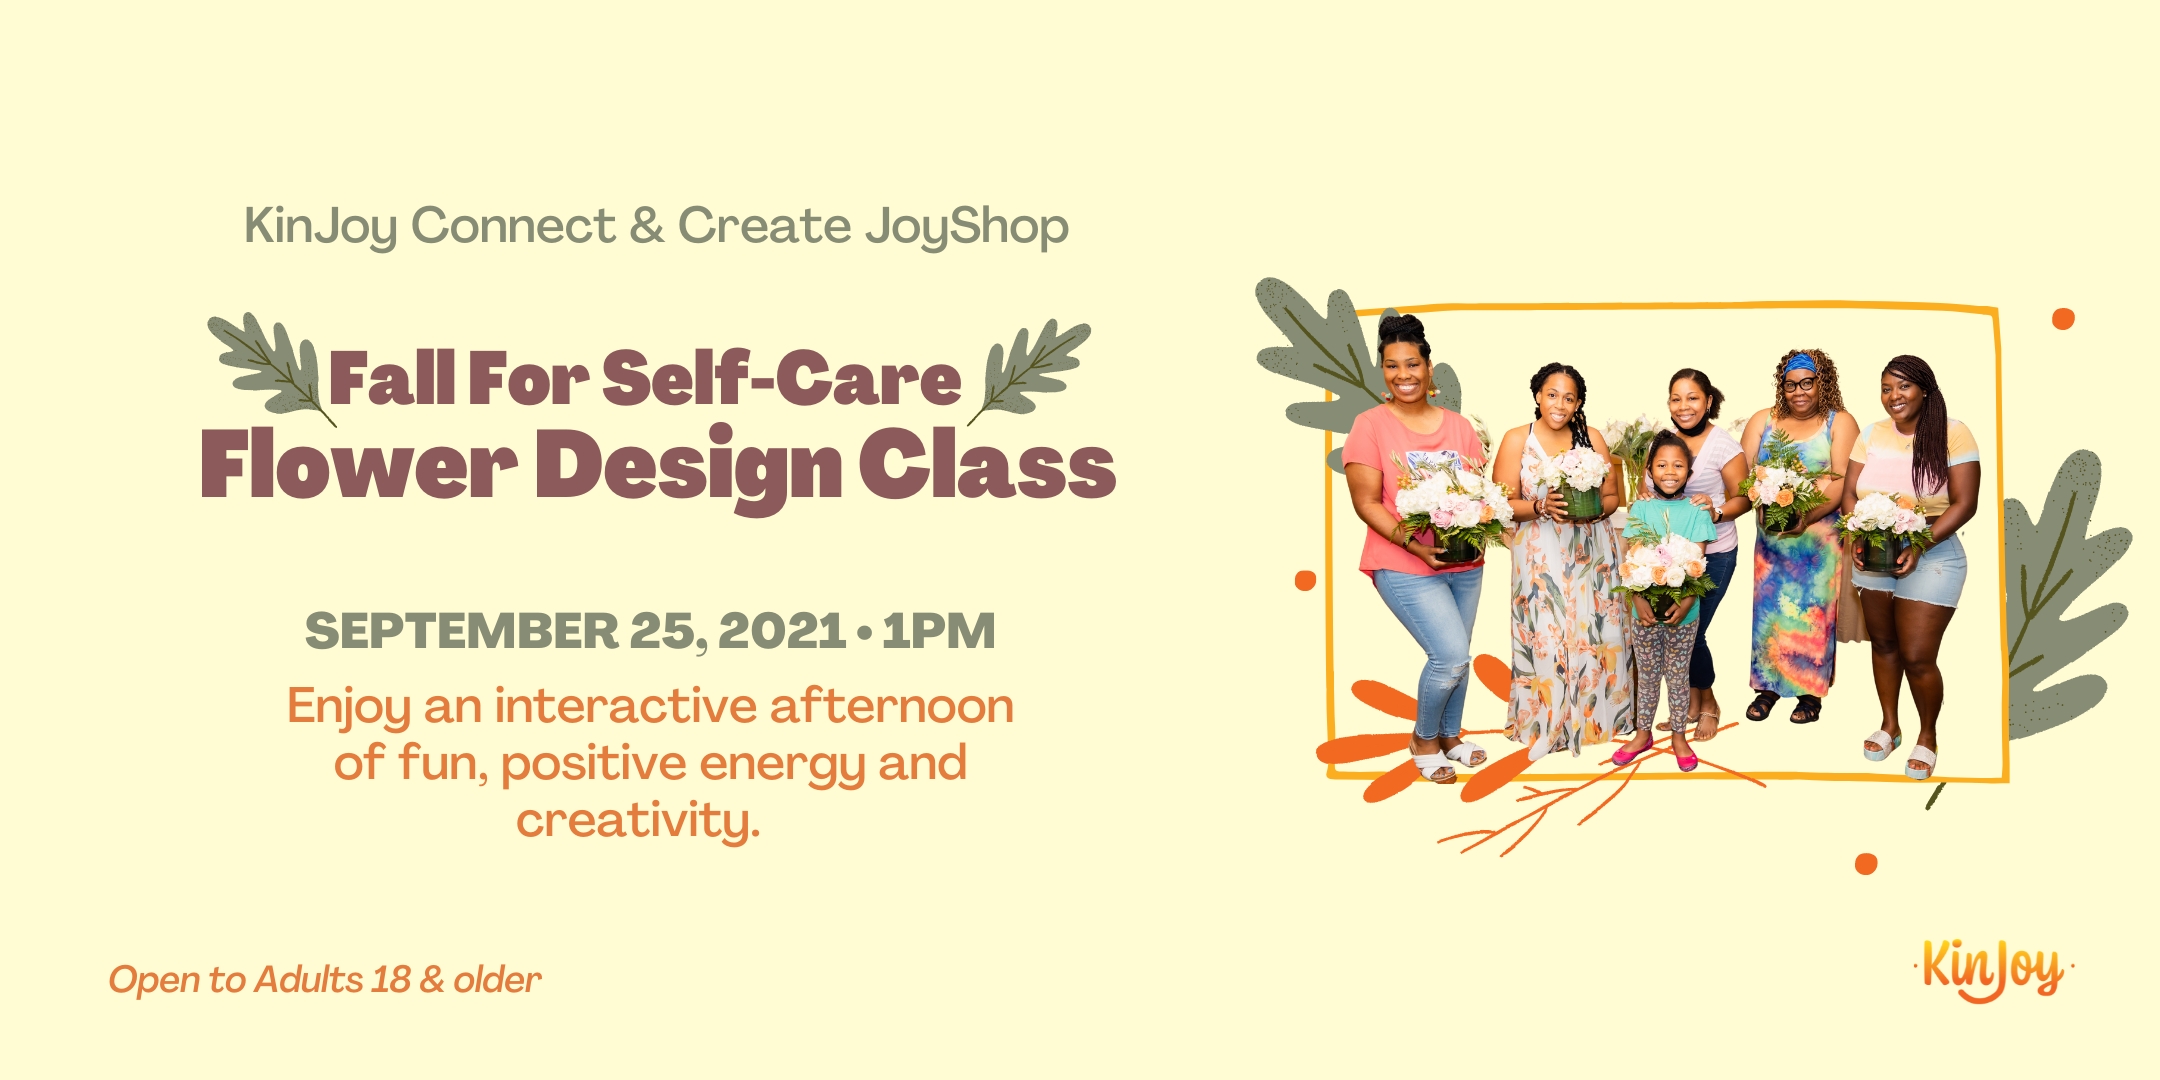 "Fall for Self-Care" Flower Design JoyShop